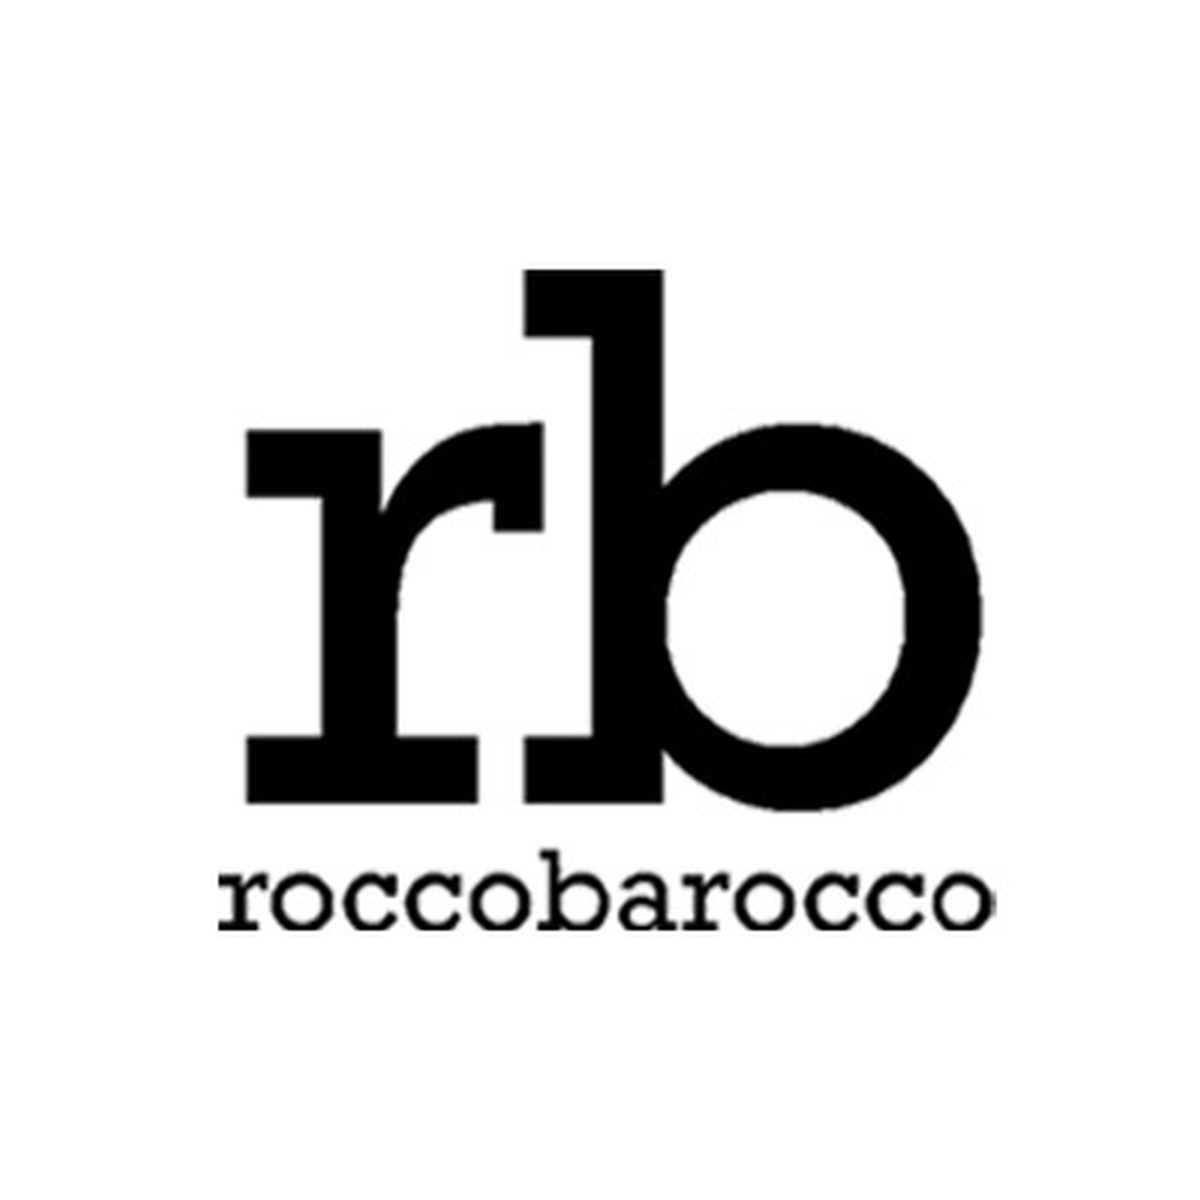 Rocco barocco